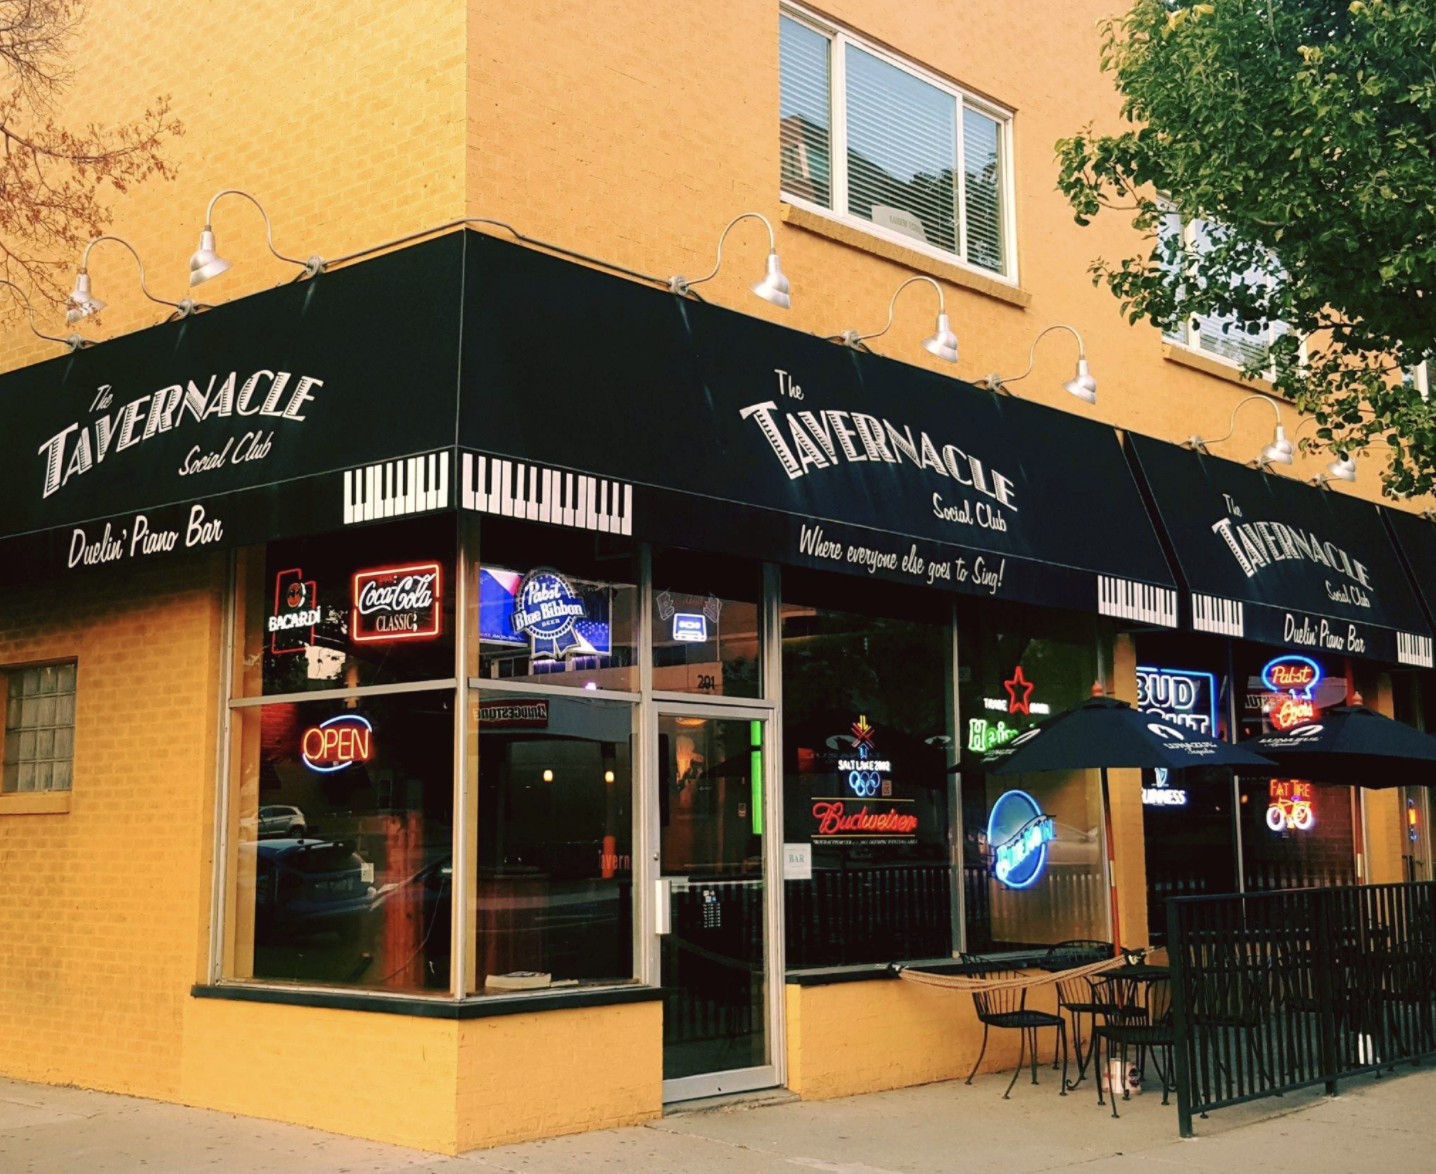 Facade of Tavernacle piano bar